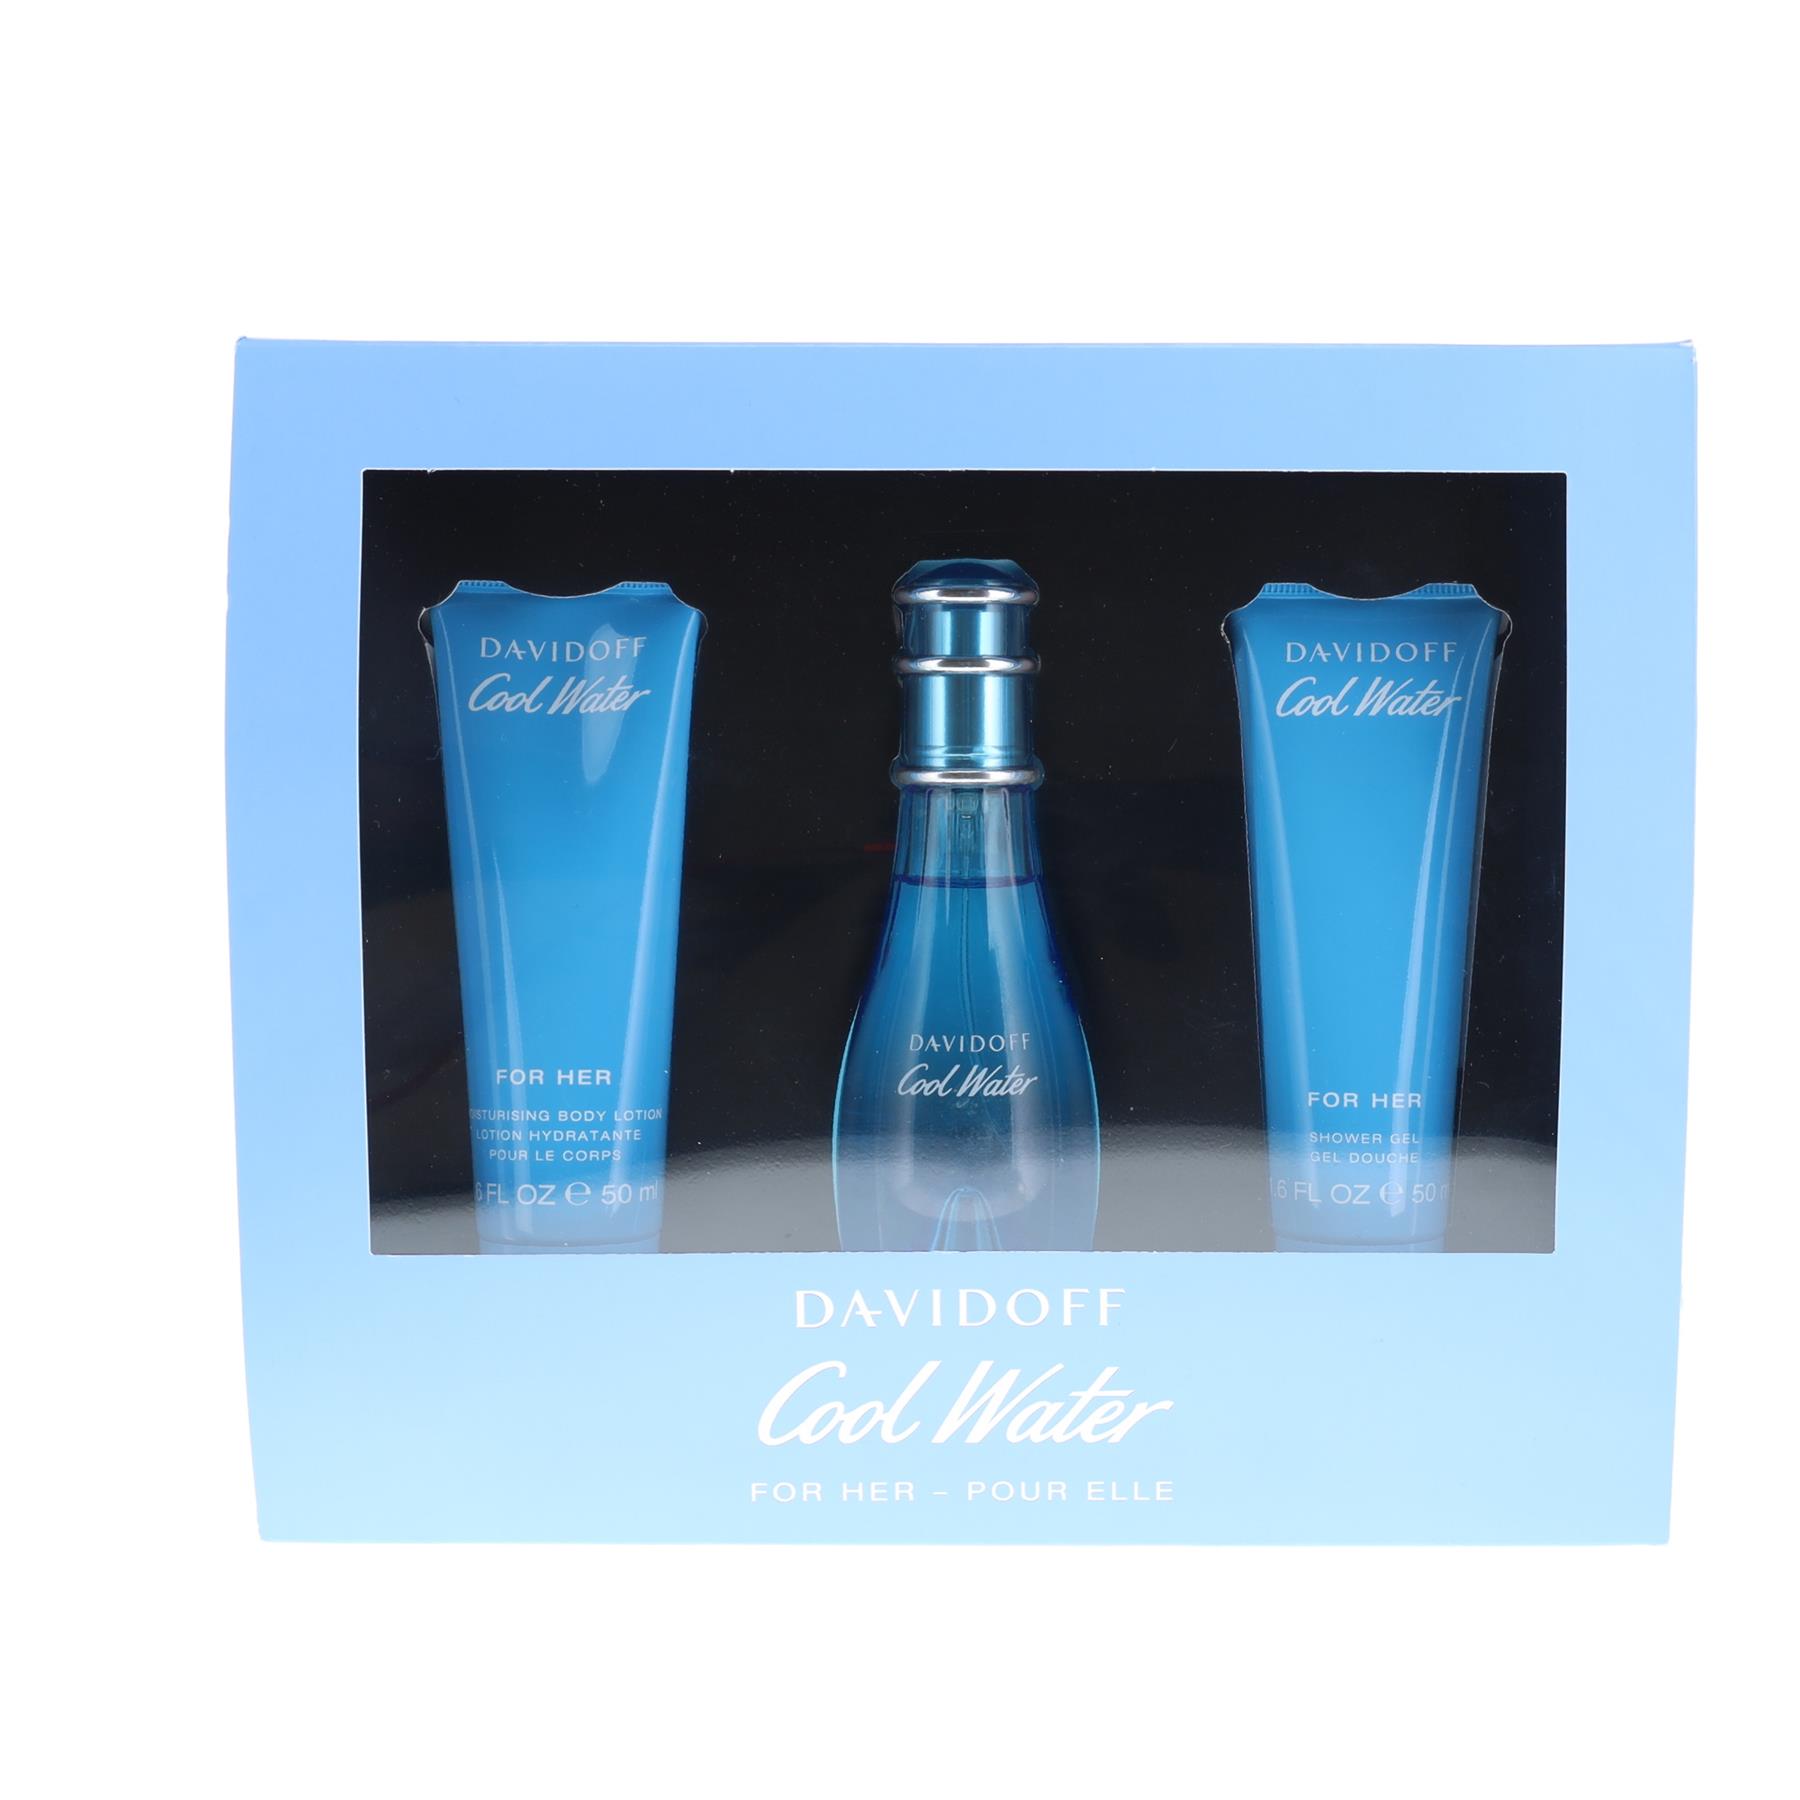 Davidoff Cool Water 50ml Eau de Toilette, 50ml Shower Gel Gift Set 50ml Body Lotion for Her from Perfume Plus Direct